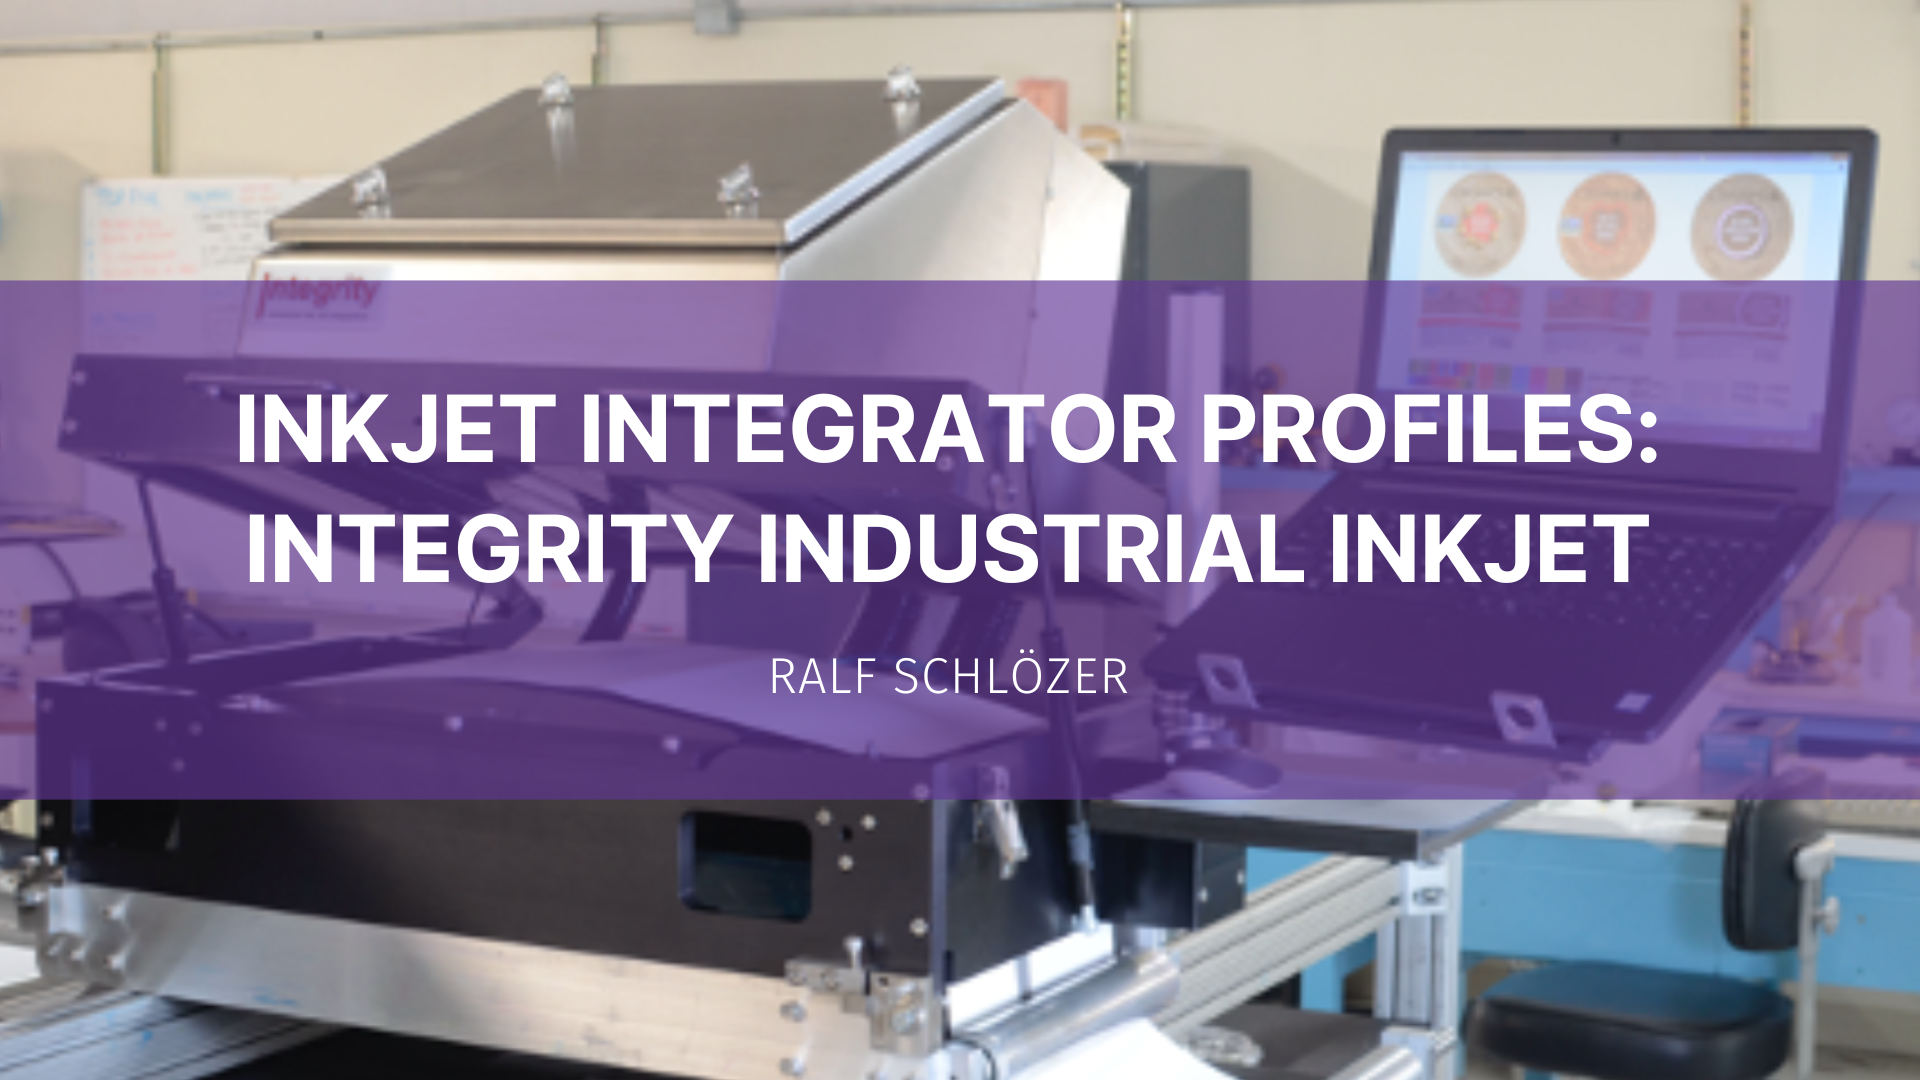 Featured image for “Inkjet Integrator Profiles: Integrity Industrial Inkjet”